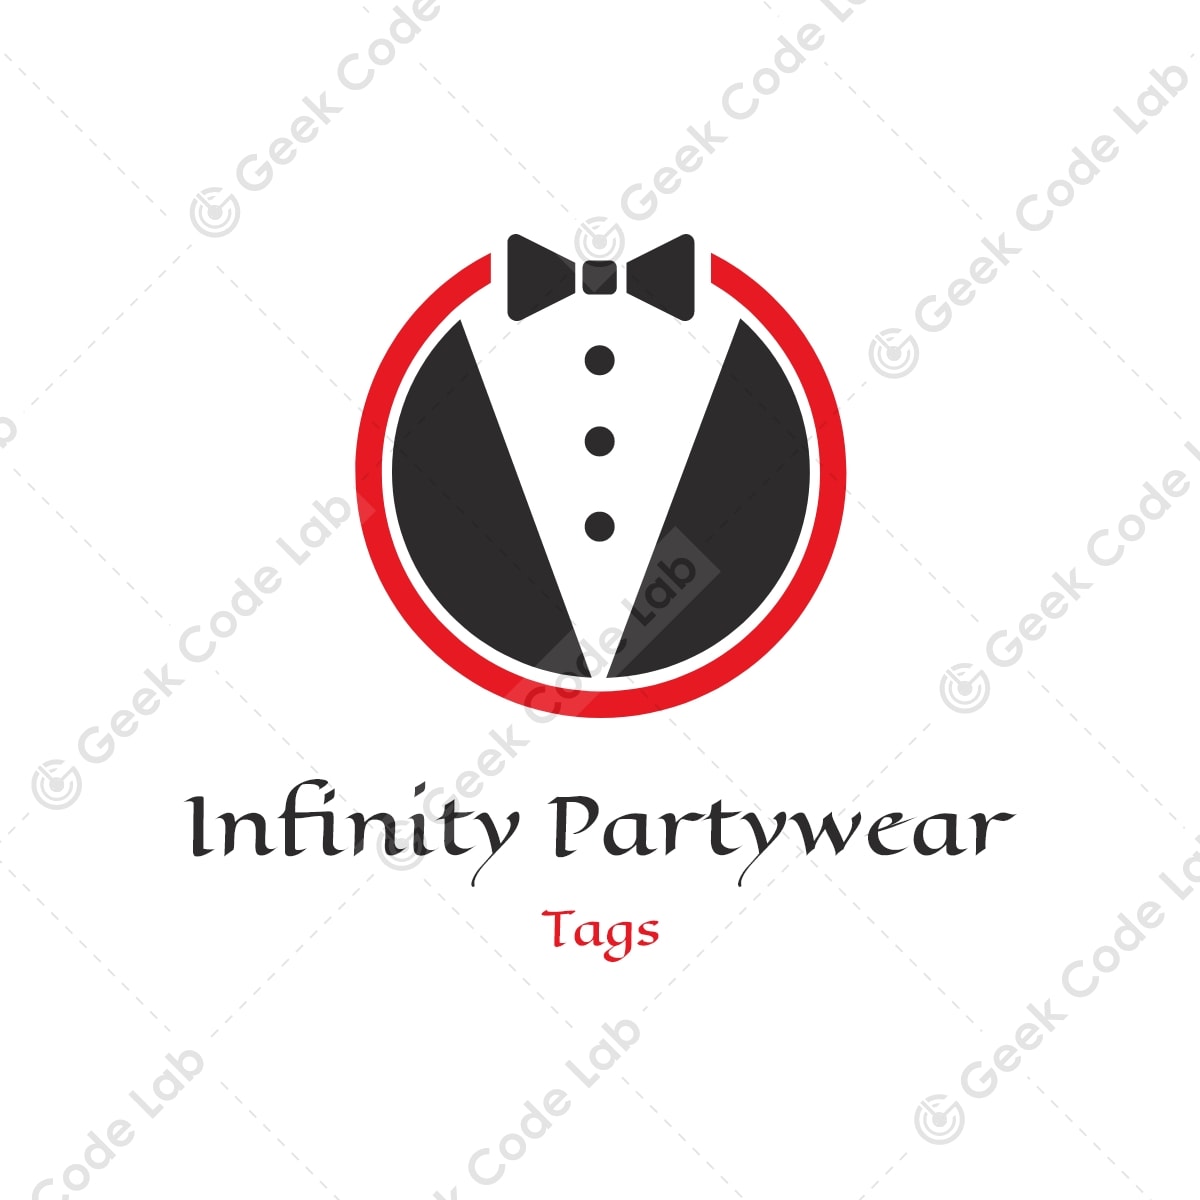 Infinity Partywear